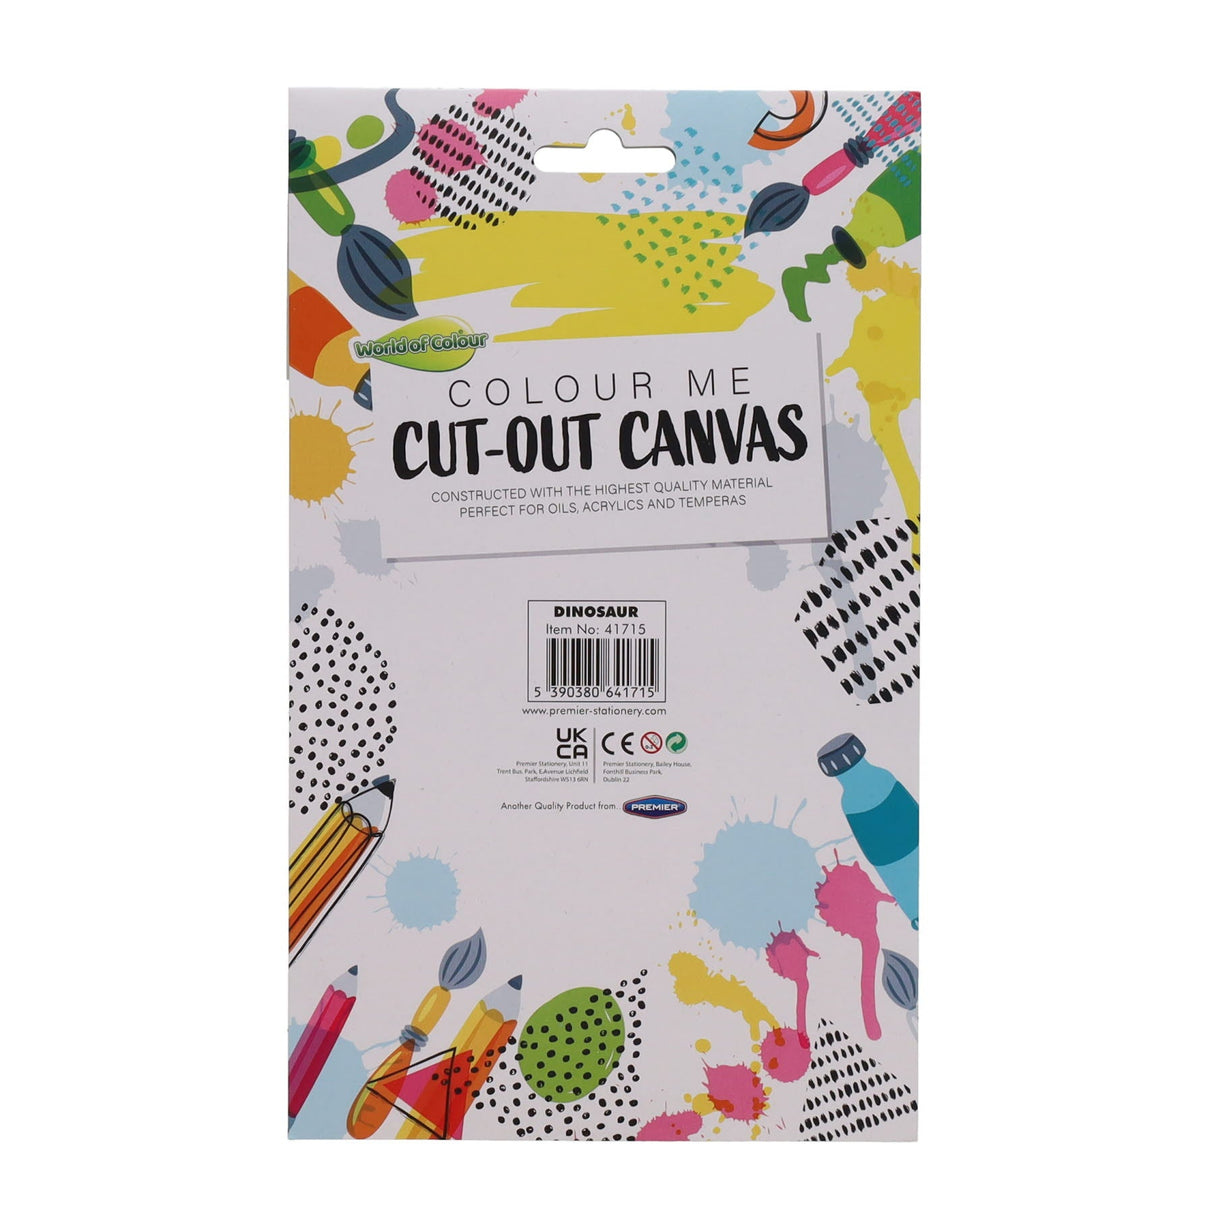 World of Colour Cut Out Canvas - Princess | Stationery Shop UK